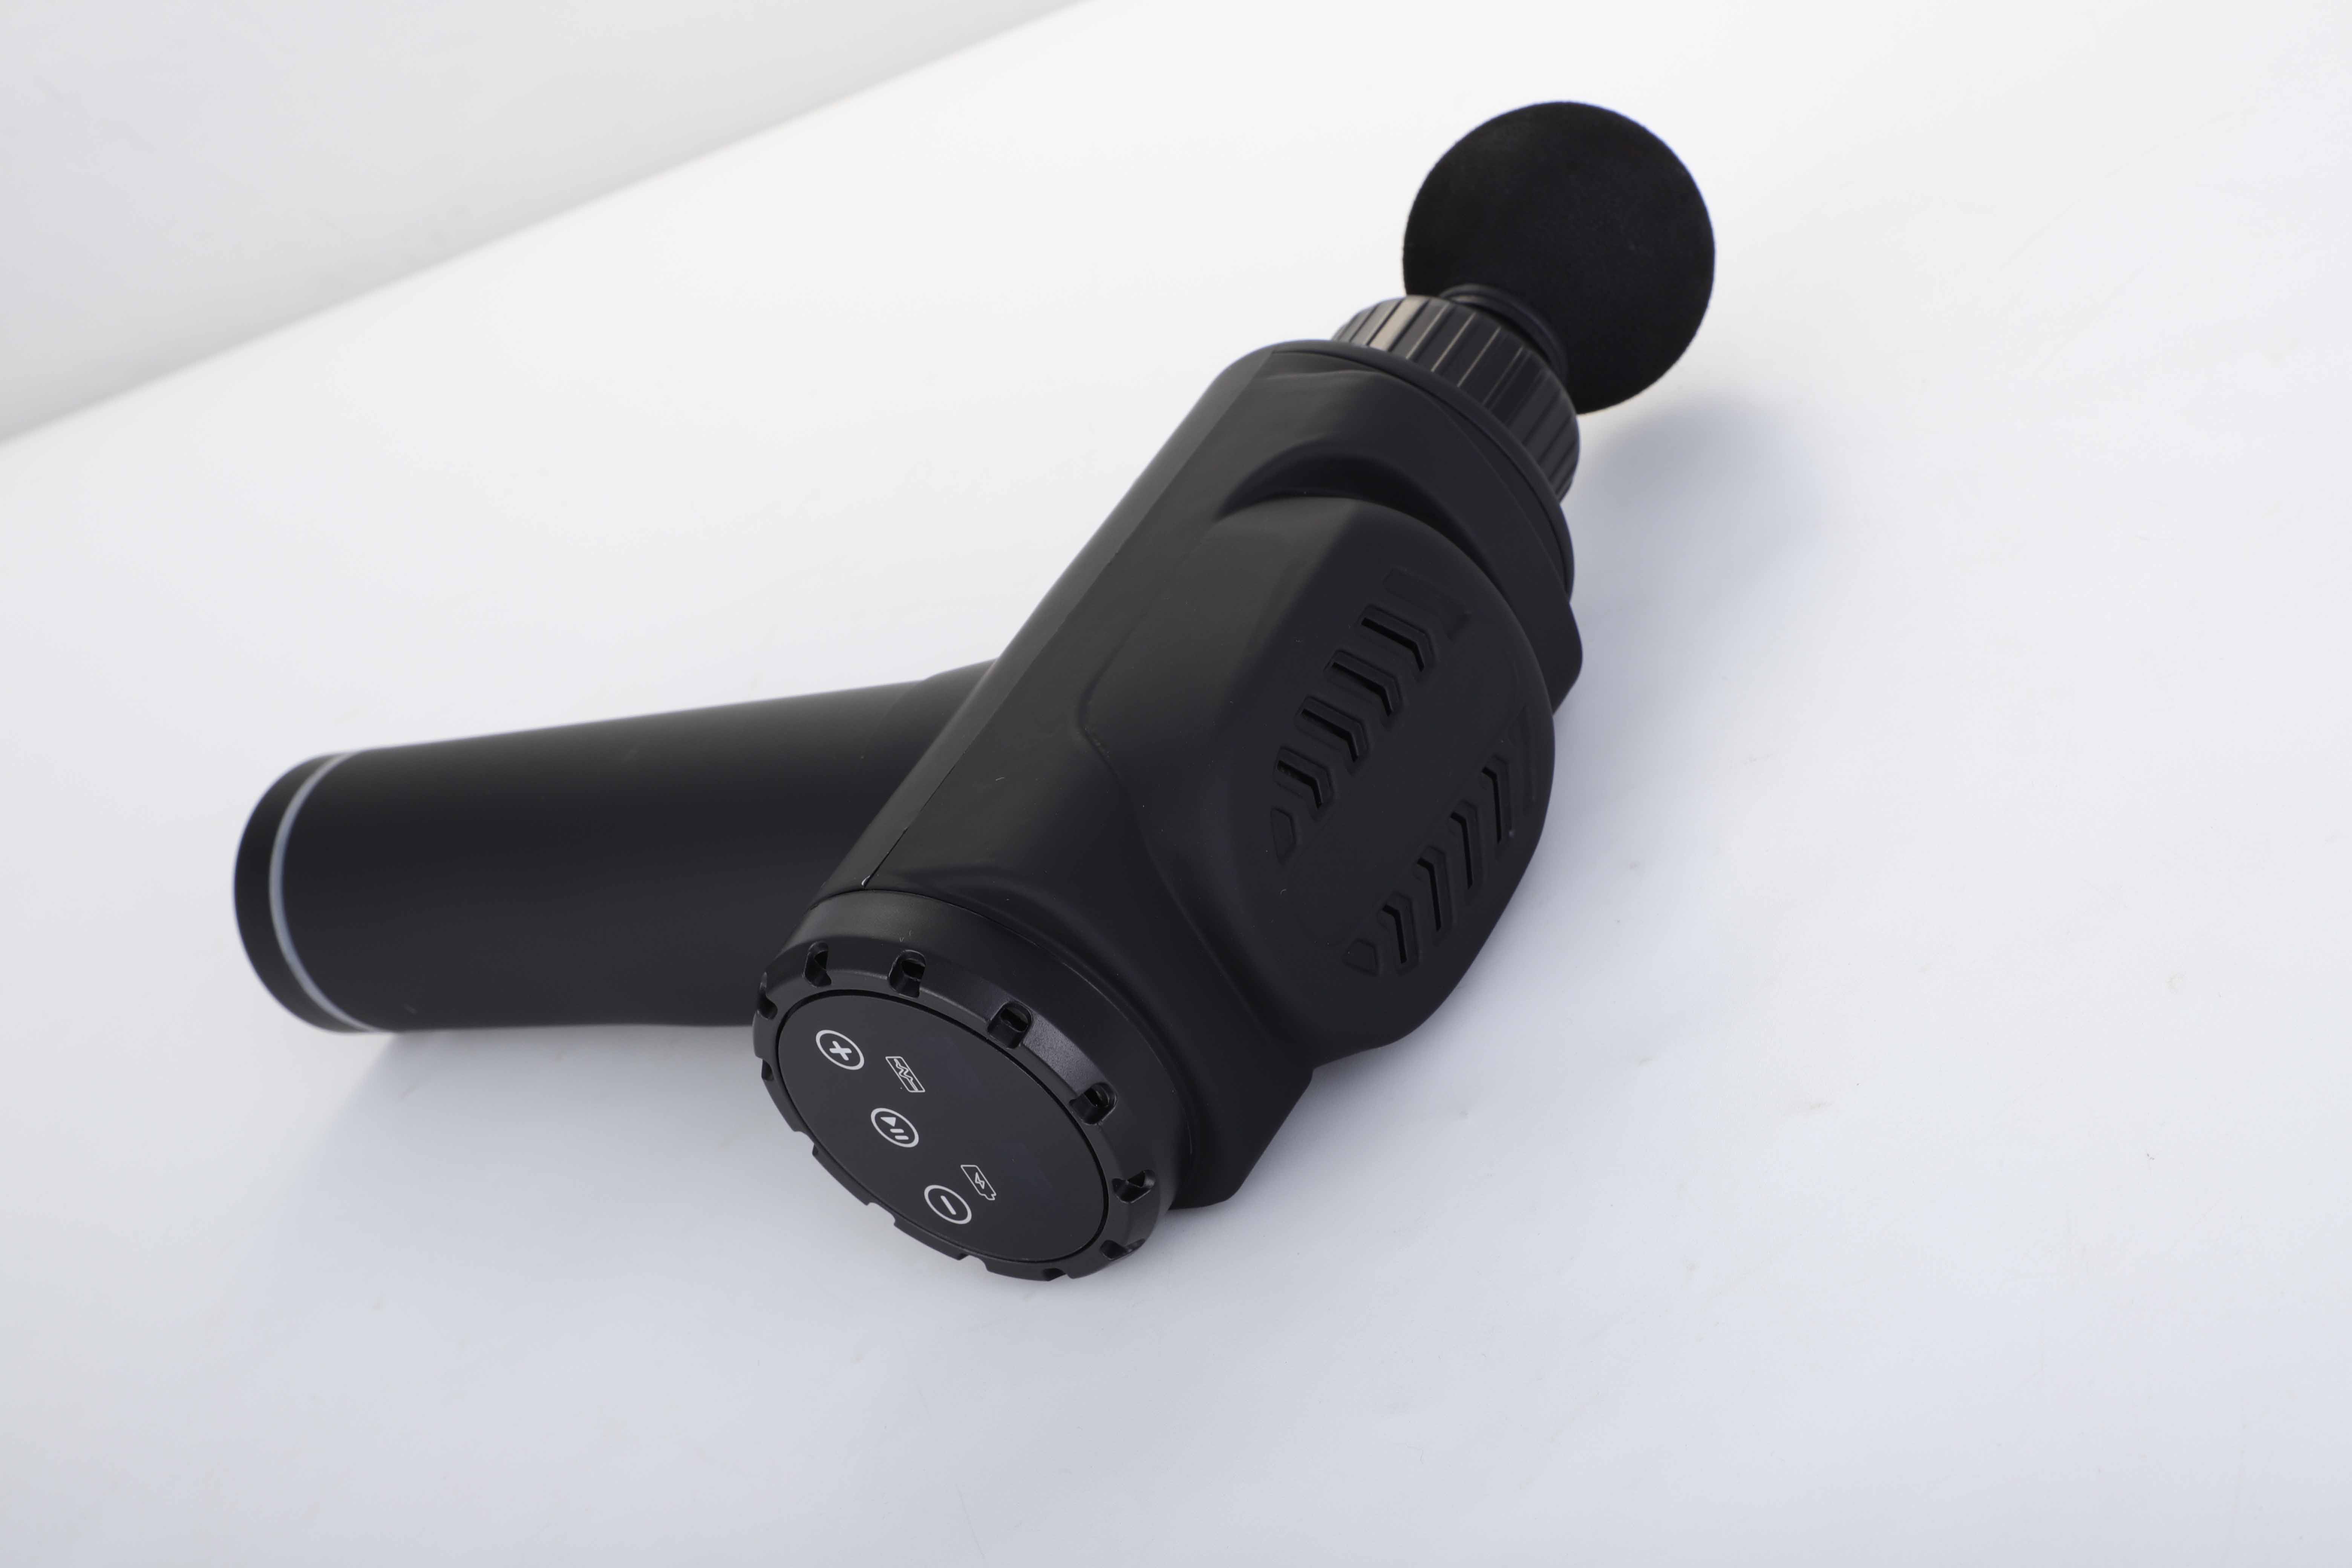 LEMES High Quality Handheld Battery Operated Vibration Massage Gun